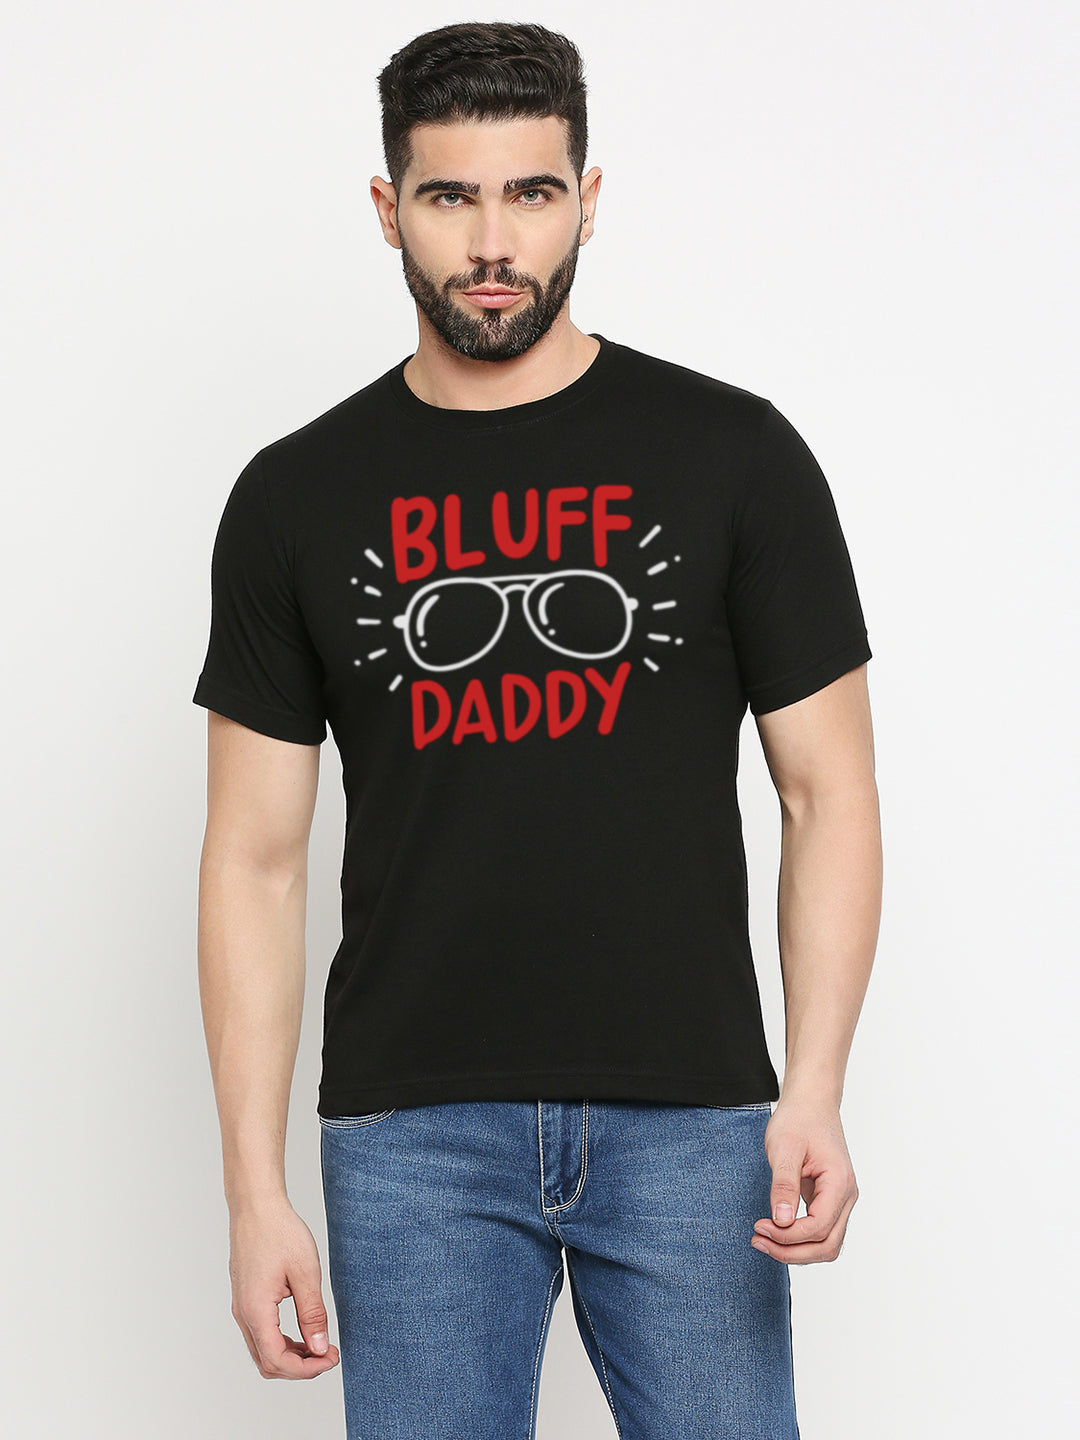 Bluff Daddy T-Shirt